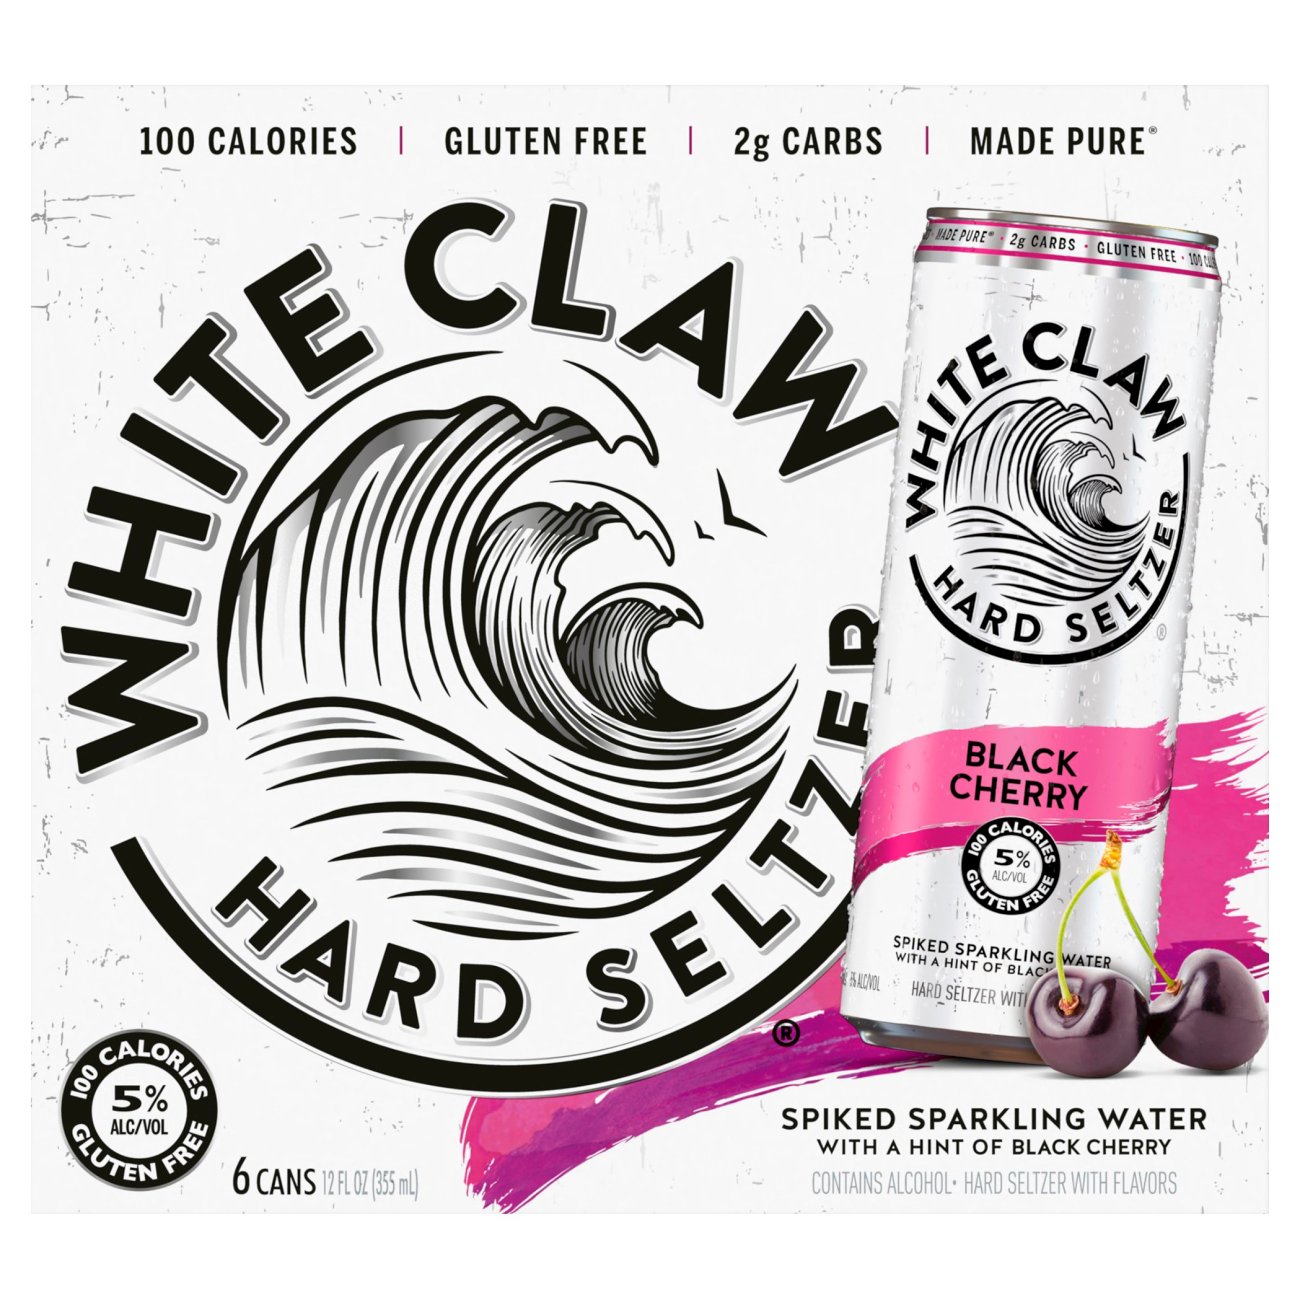 White Claw Black Cherry Hard Seltzer Pk Cans Shop Malt Beverages